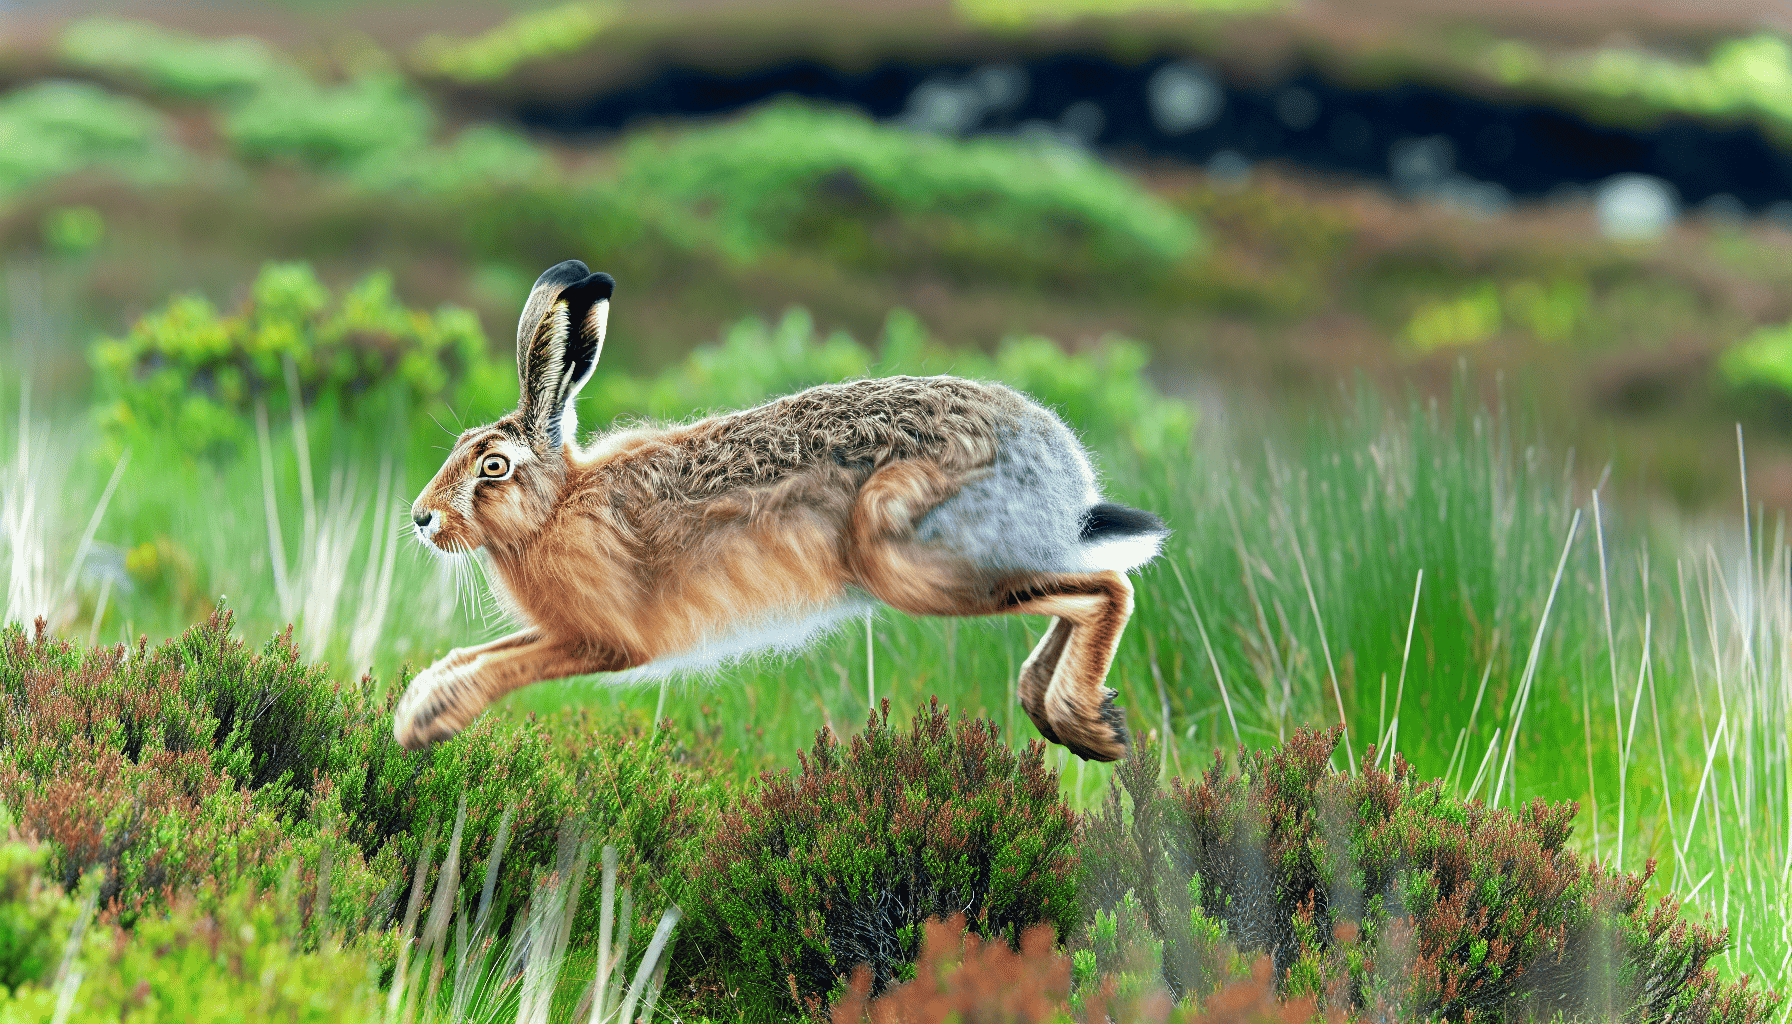 Irish Mountain Hare in natural habitat